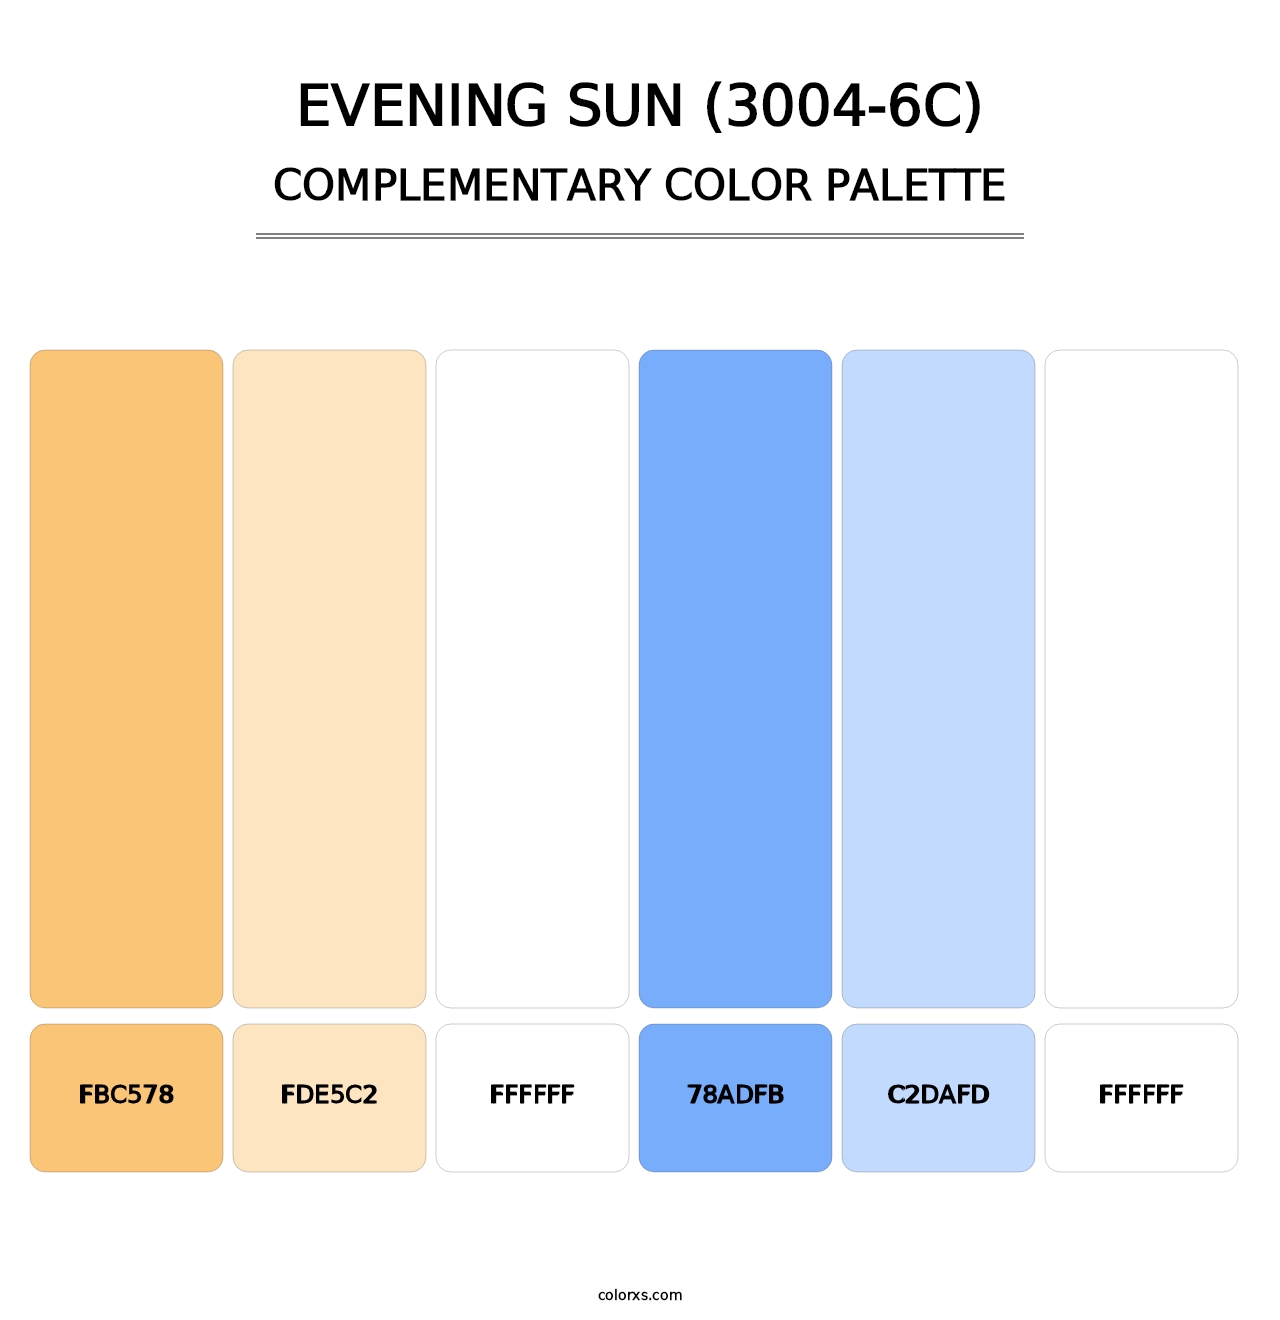 Evening Sun (3004-6C) - Complementary Color Palette